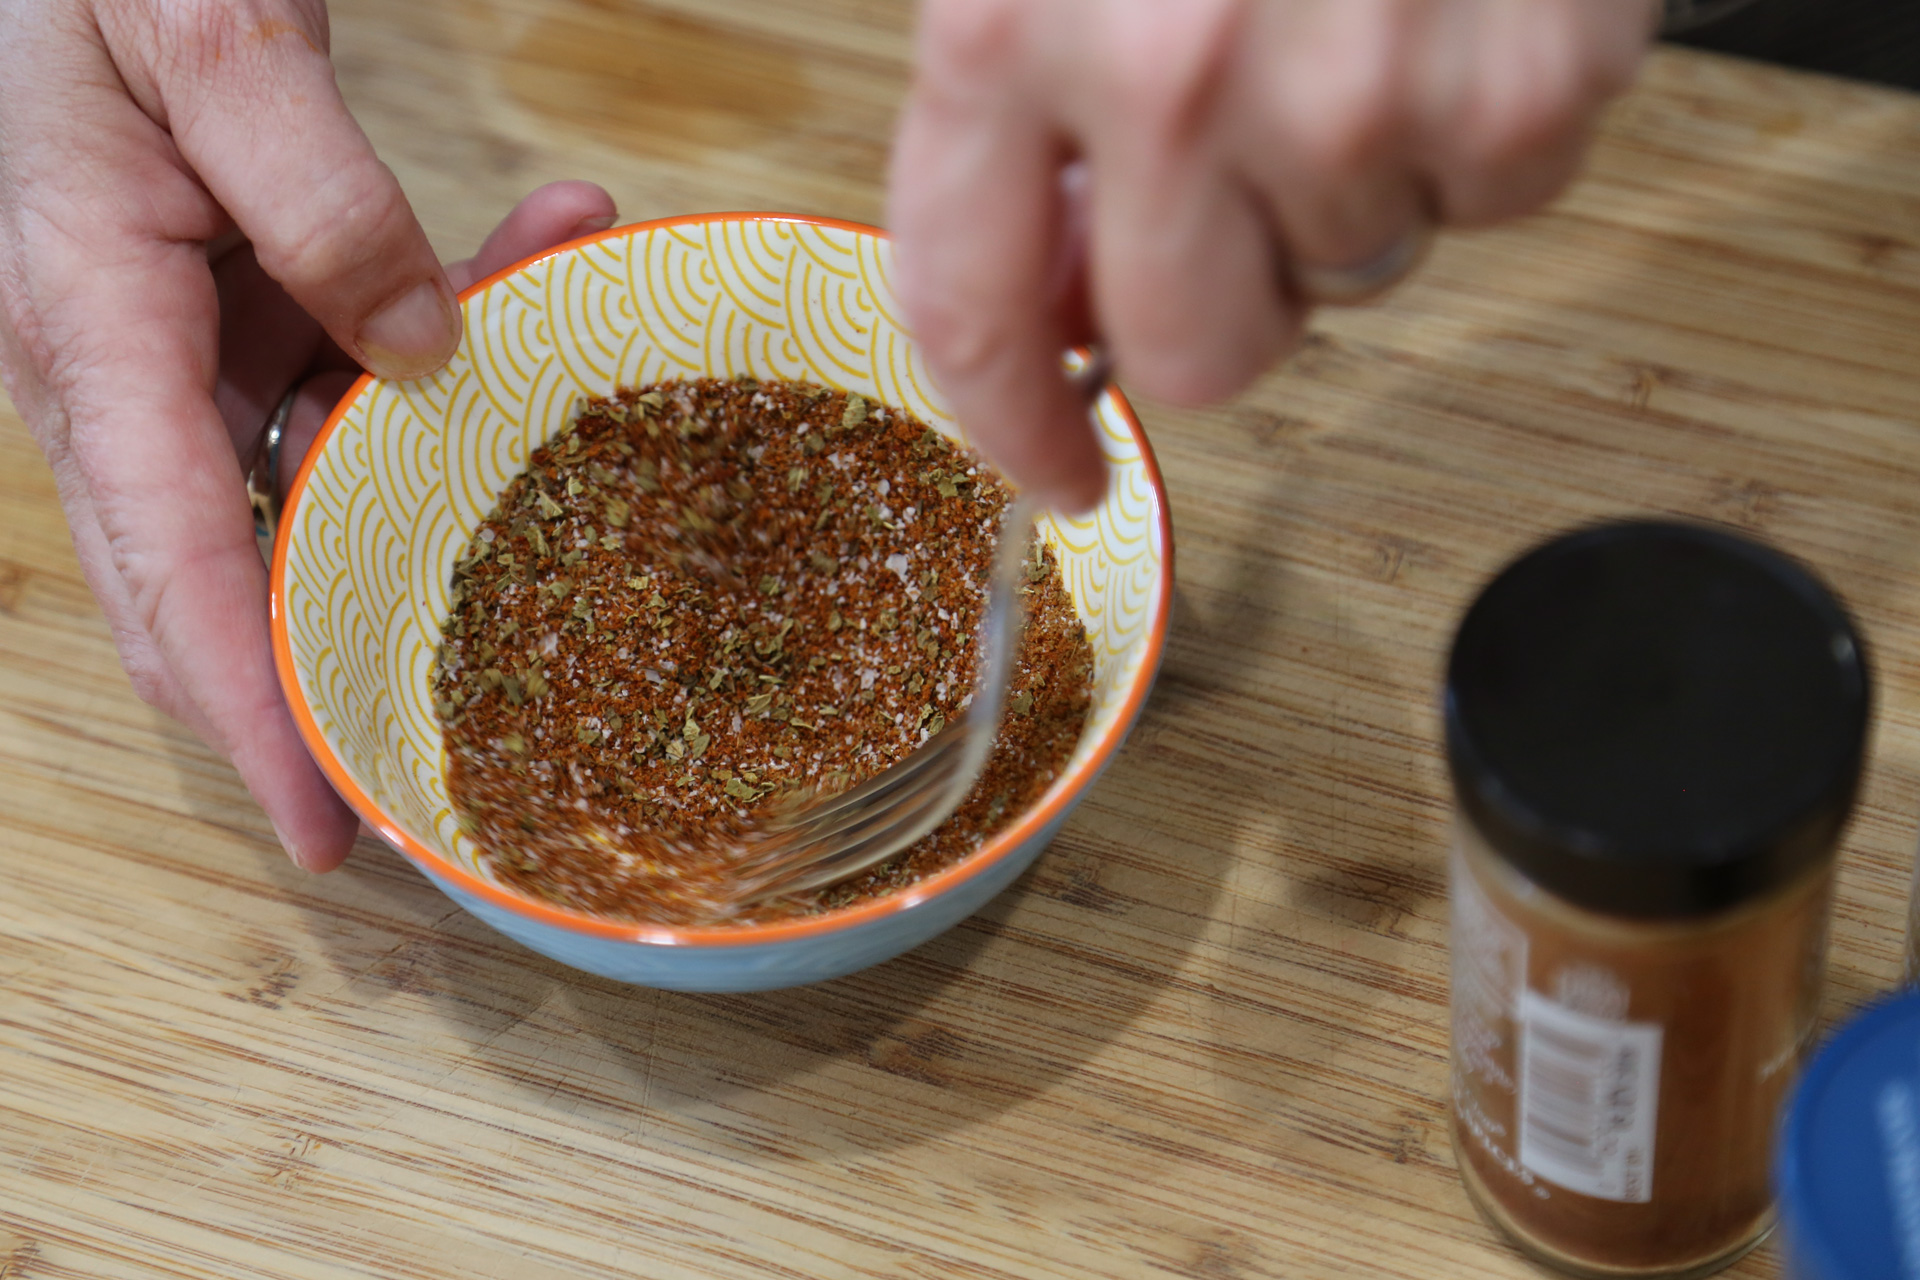 In a bowl, mix together the chili powder, paprika, cumin, oregano, and salt.